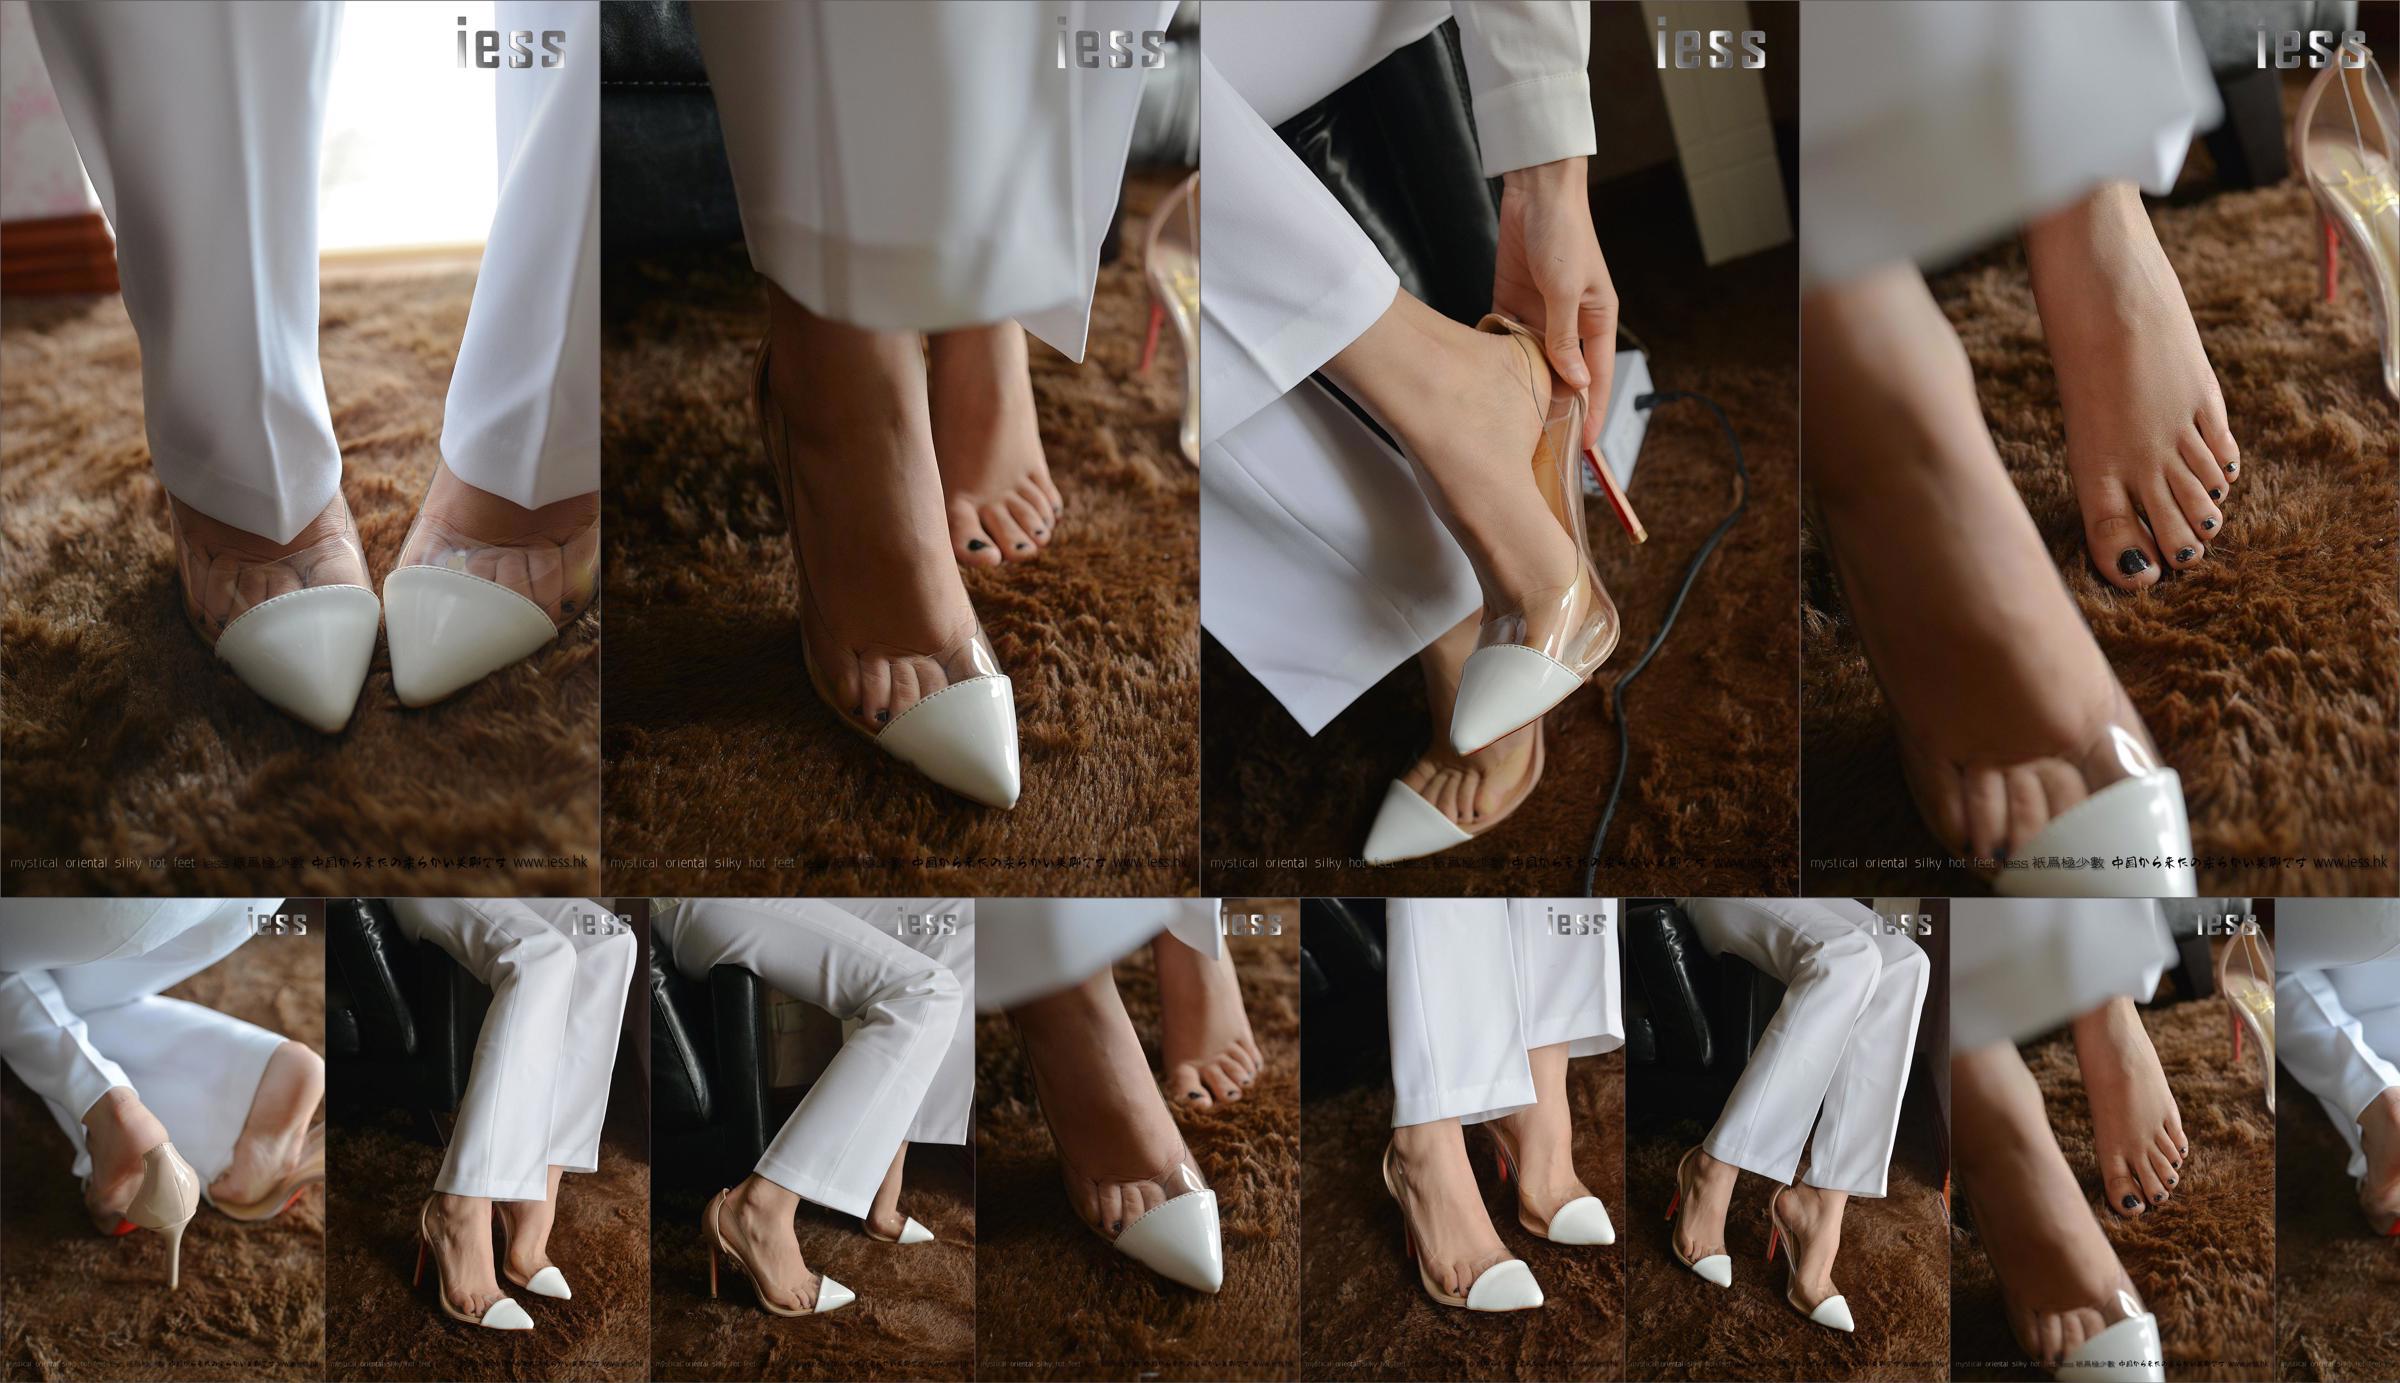 Silky Foot Bento 058 Suspense "Collection-Bare Foot High Heels" [IESS Wei Si Fun Xiang] No.c06ea6 Page 1